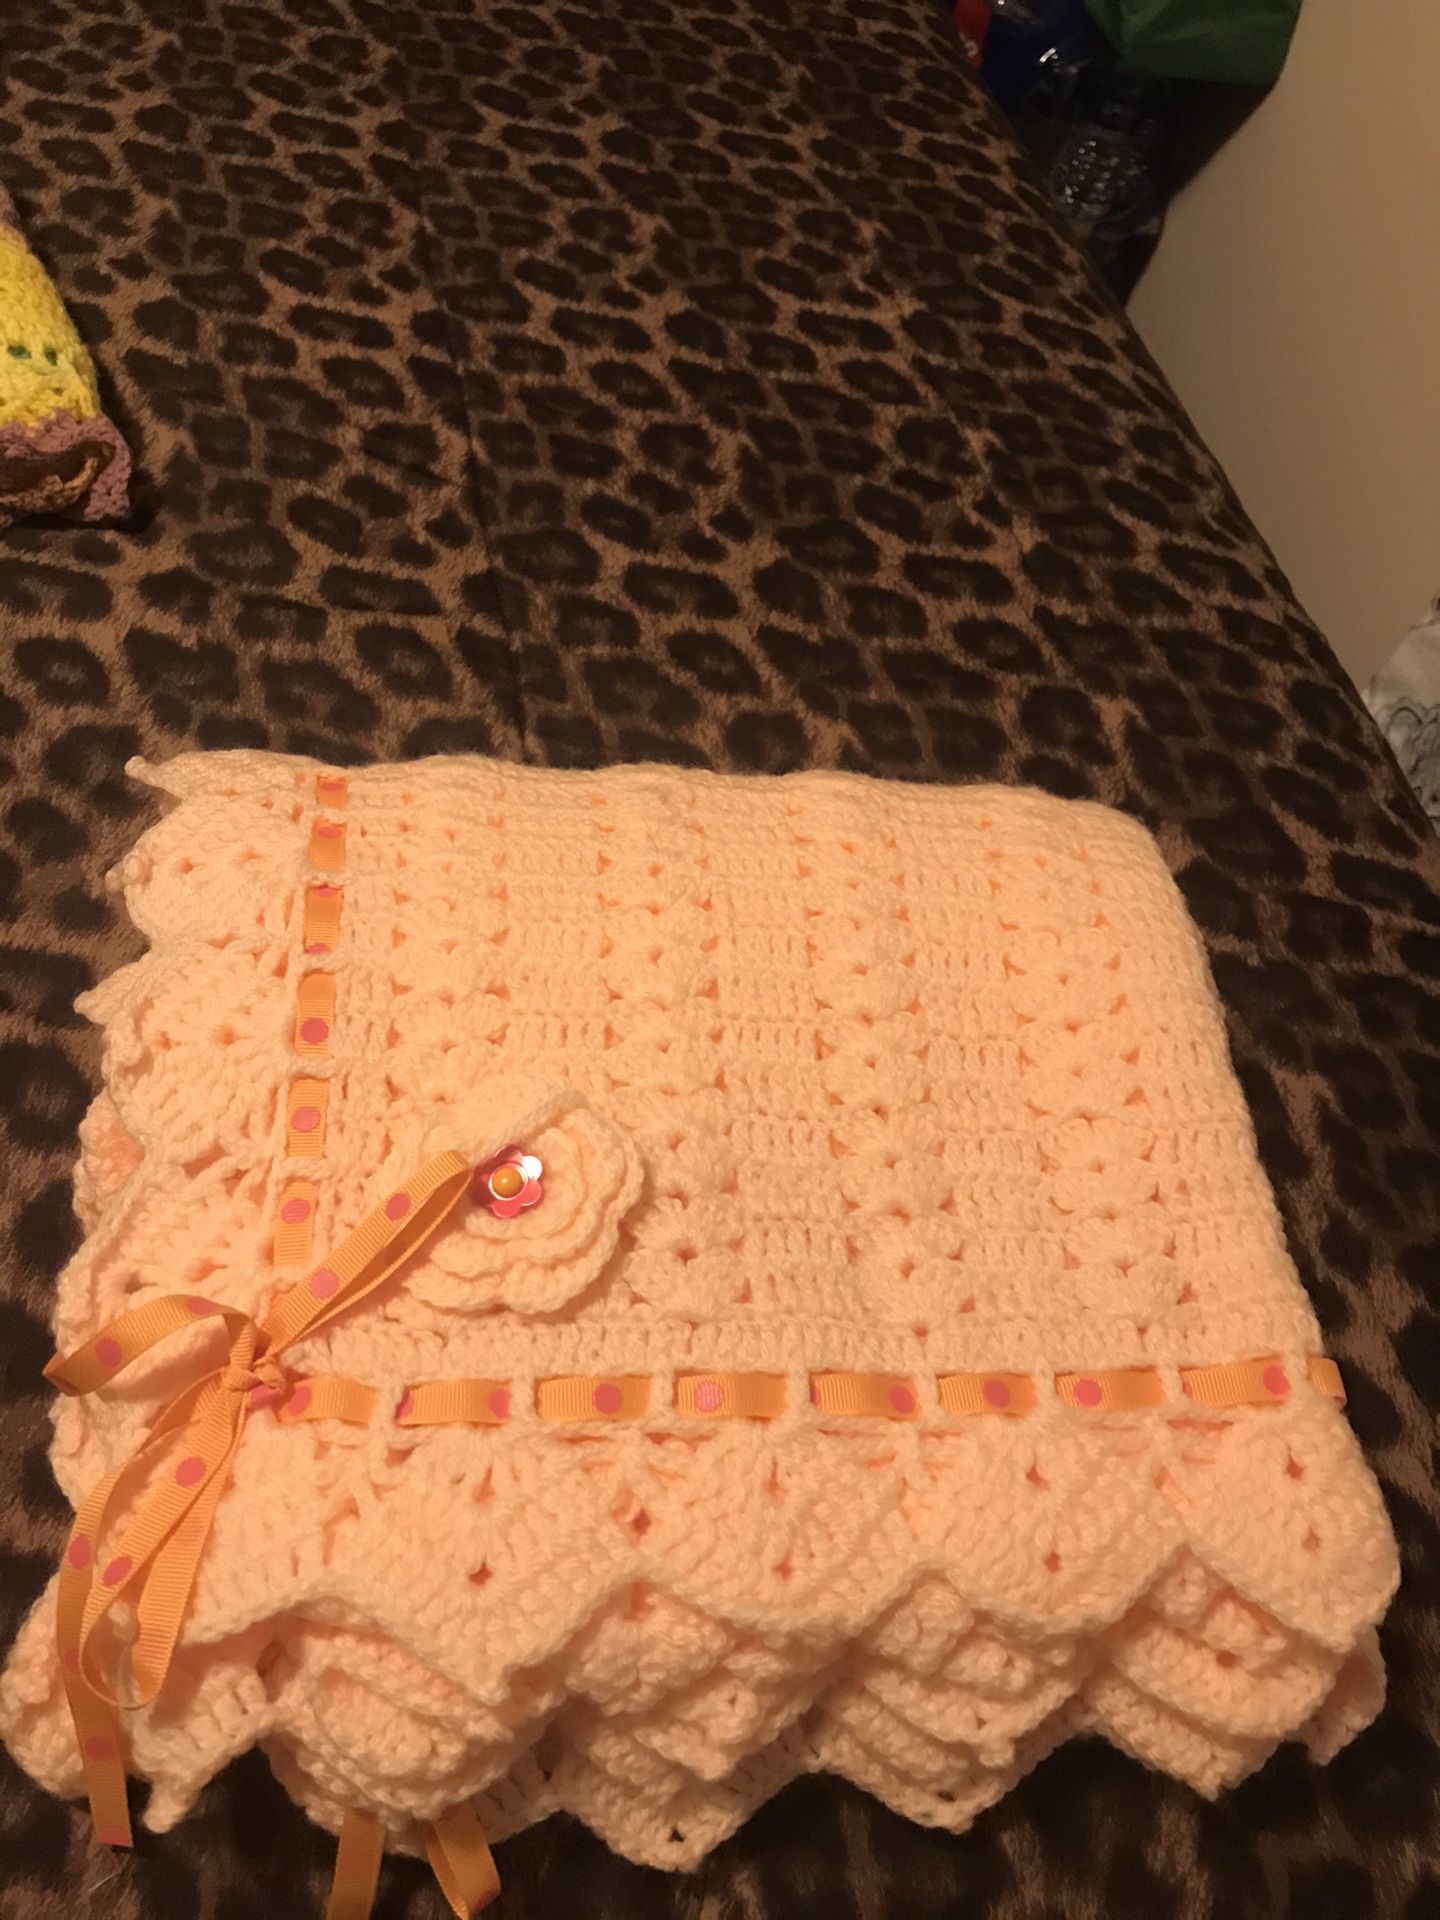 Baby’s blanket a crochet